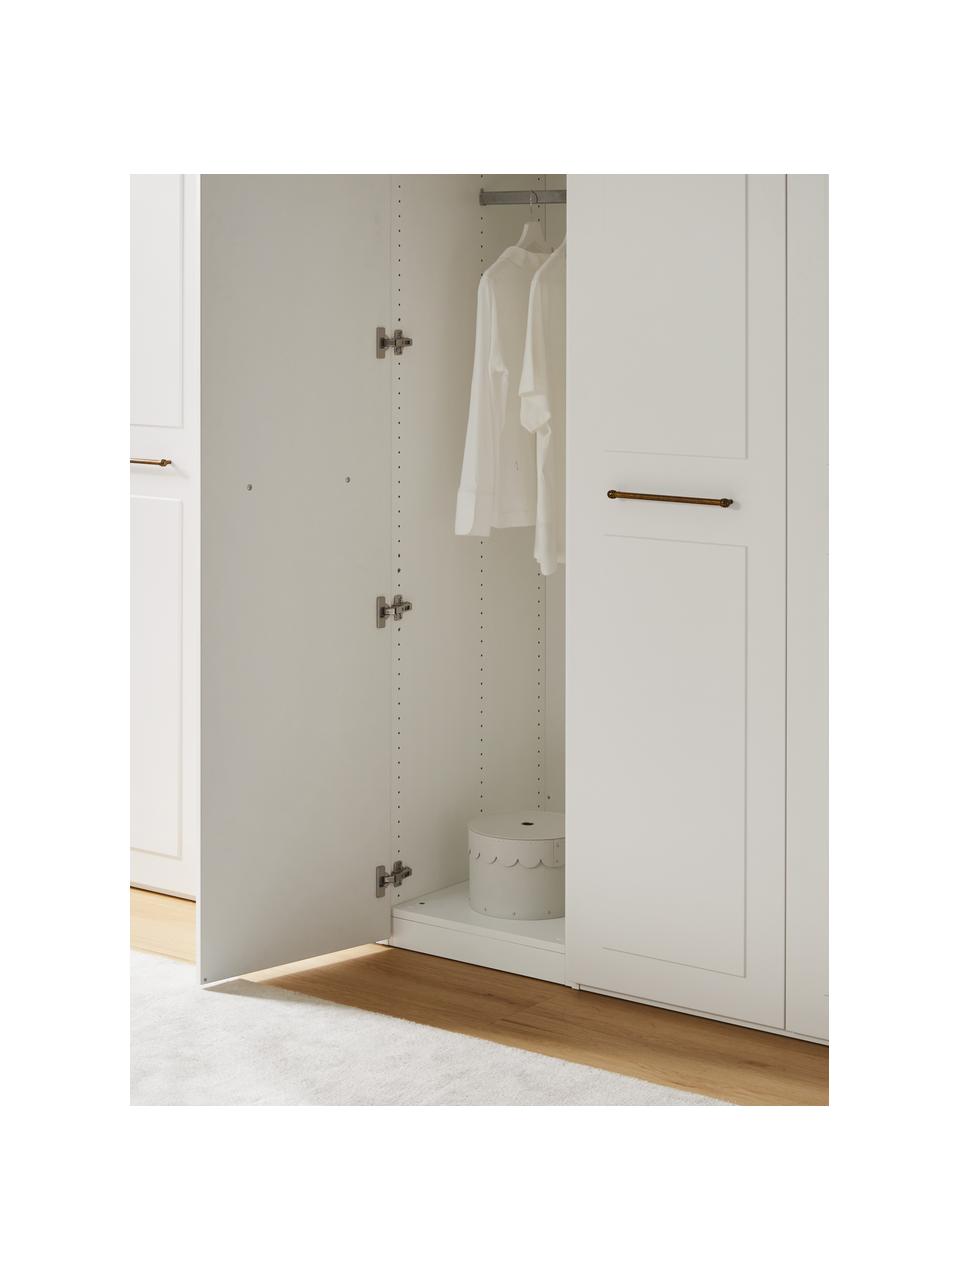 Modulární skříň s otočnými dveřmi Charlotte, šířka 250 cm, více variant, Bílá, Interiér Basic, výška 200 cm